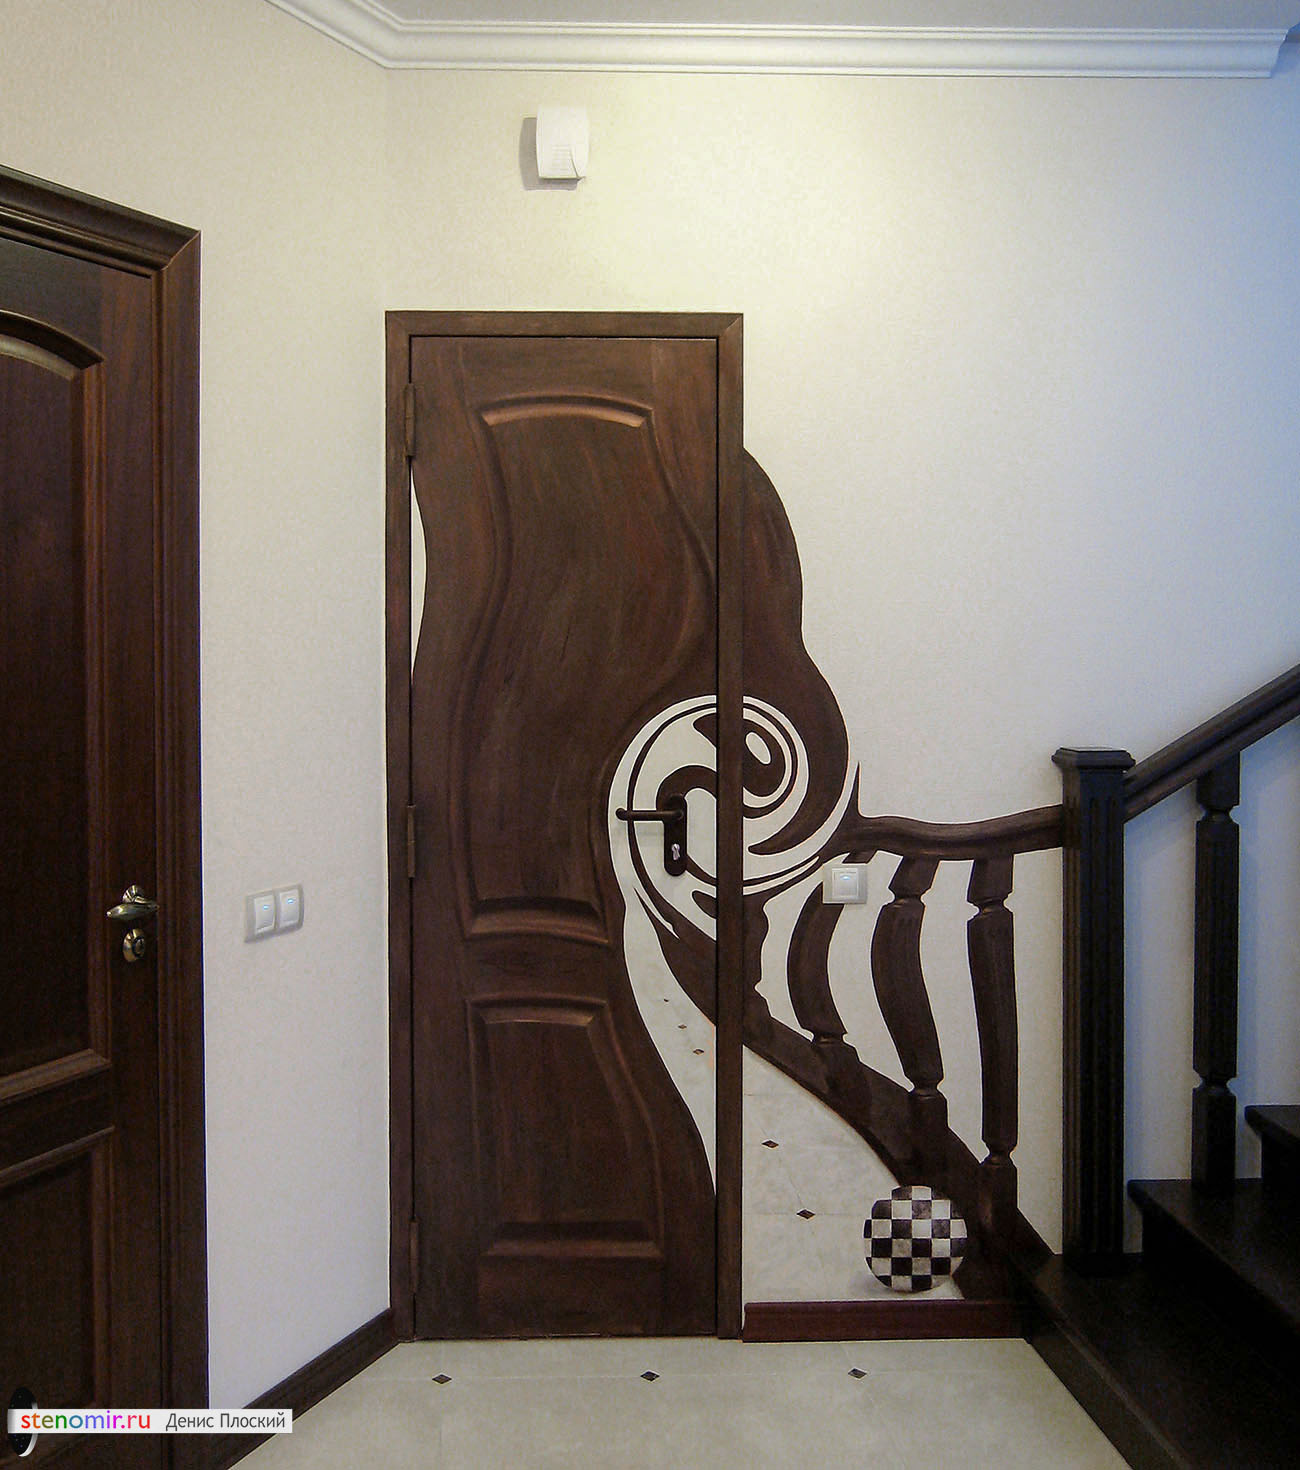 3D рисунок на стене с дверью - СПб